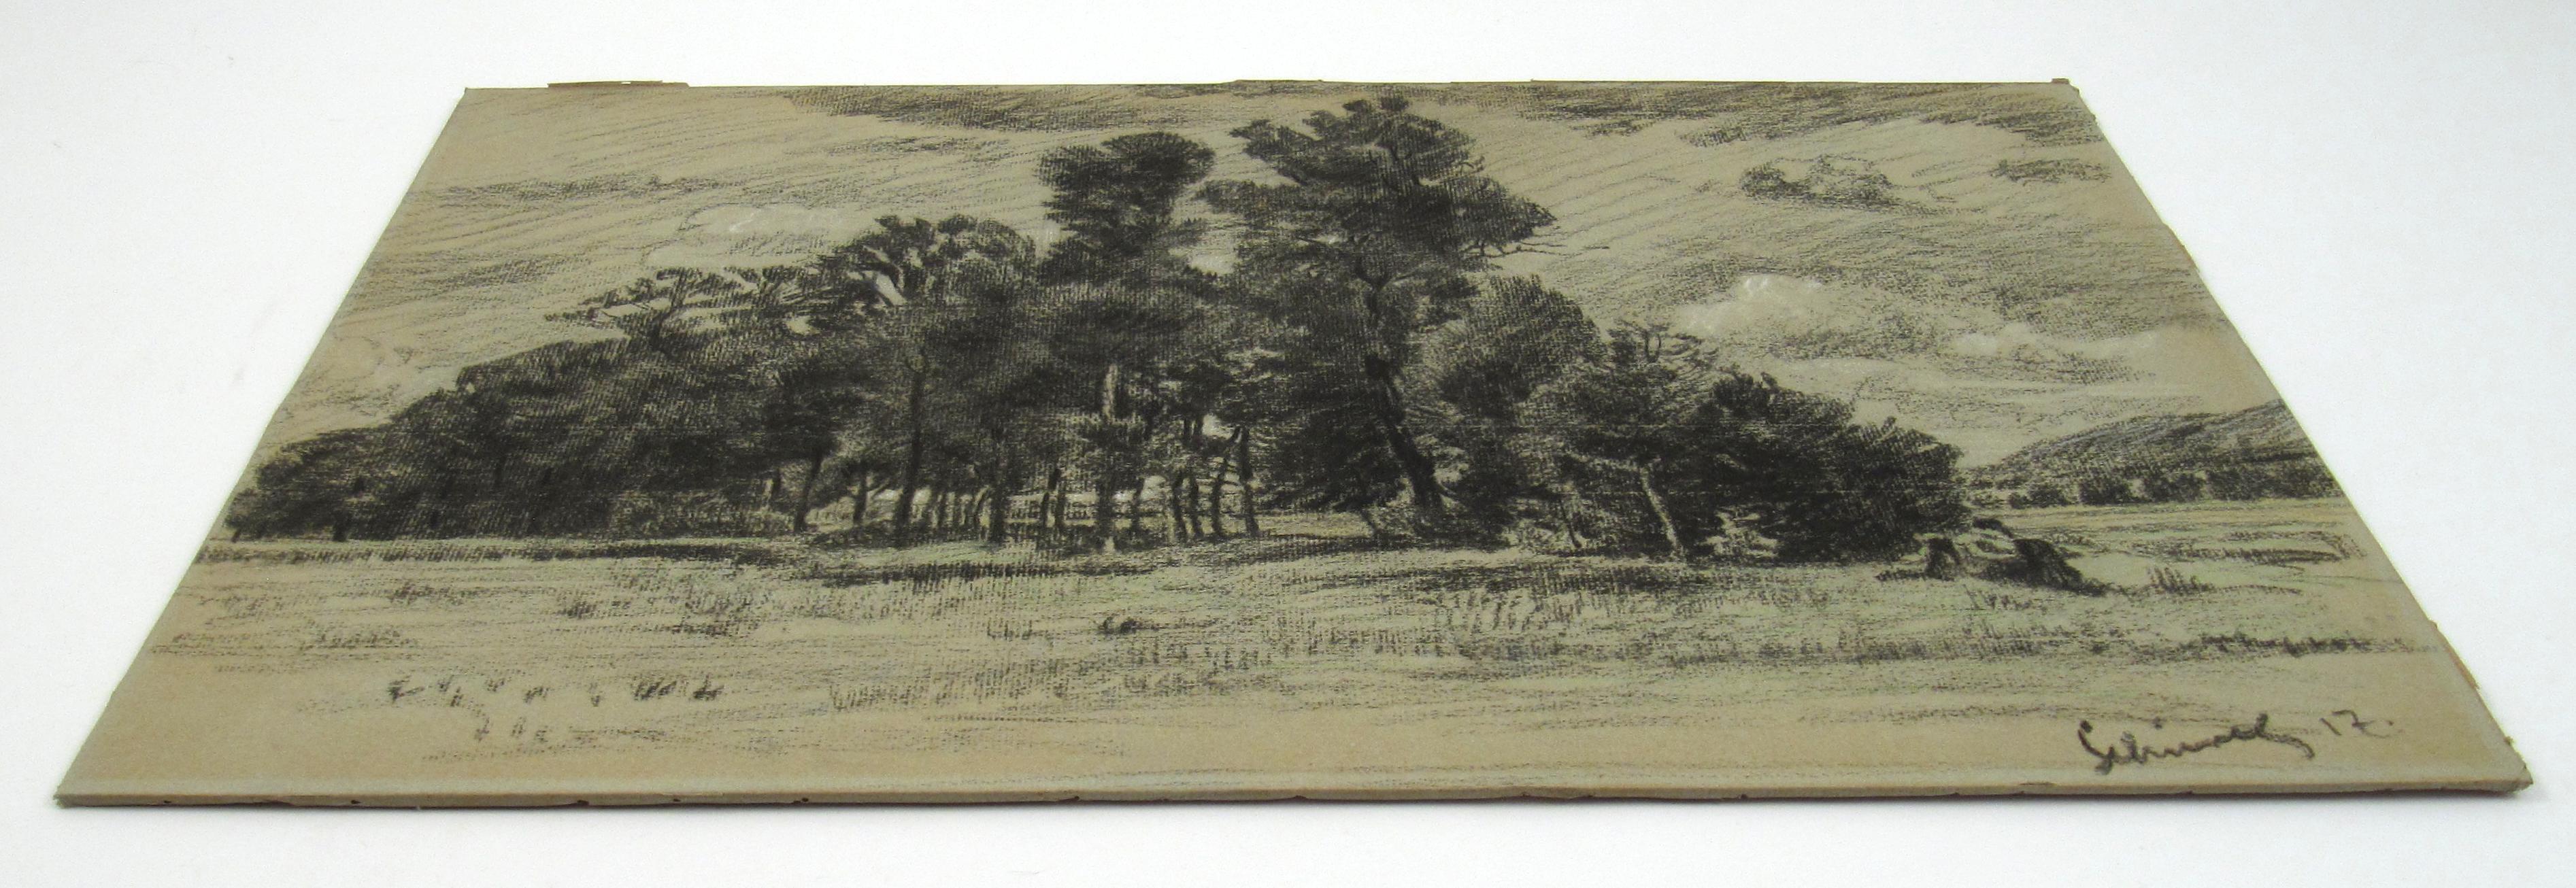 Paul Schürch (1886-1939) - Romantic Landscape Drawing 1917 Solothurn Switzerland For Sale 1